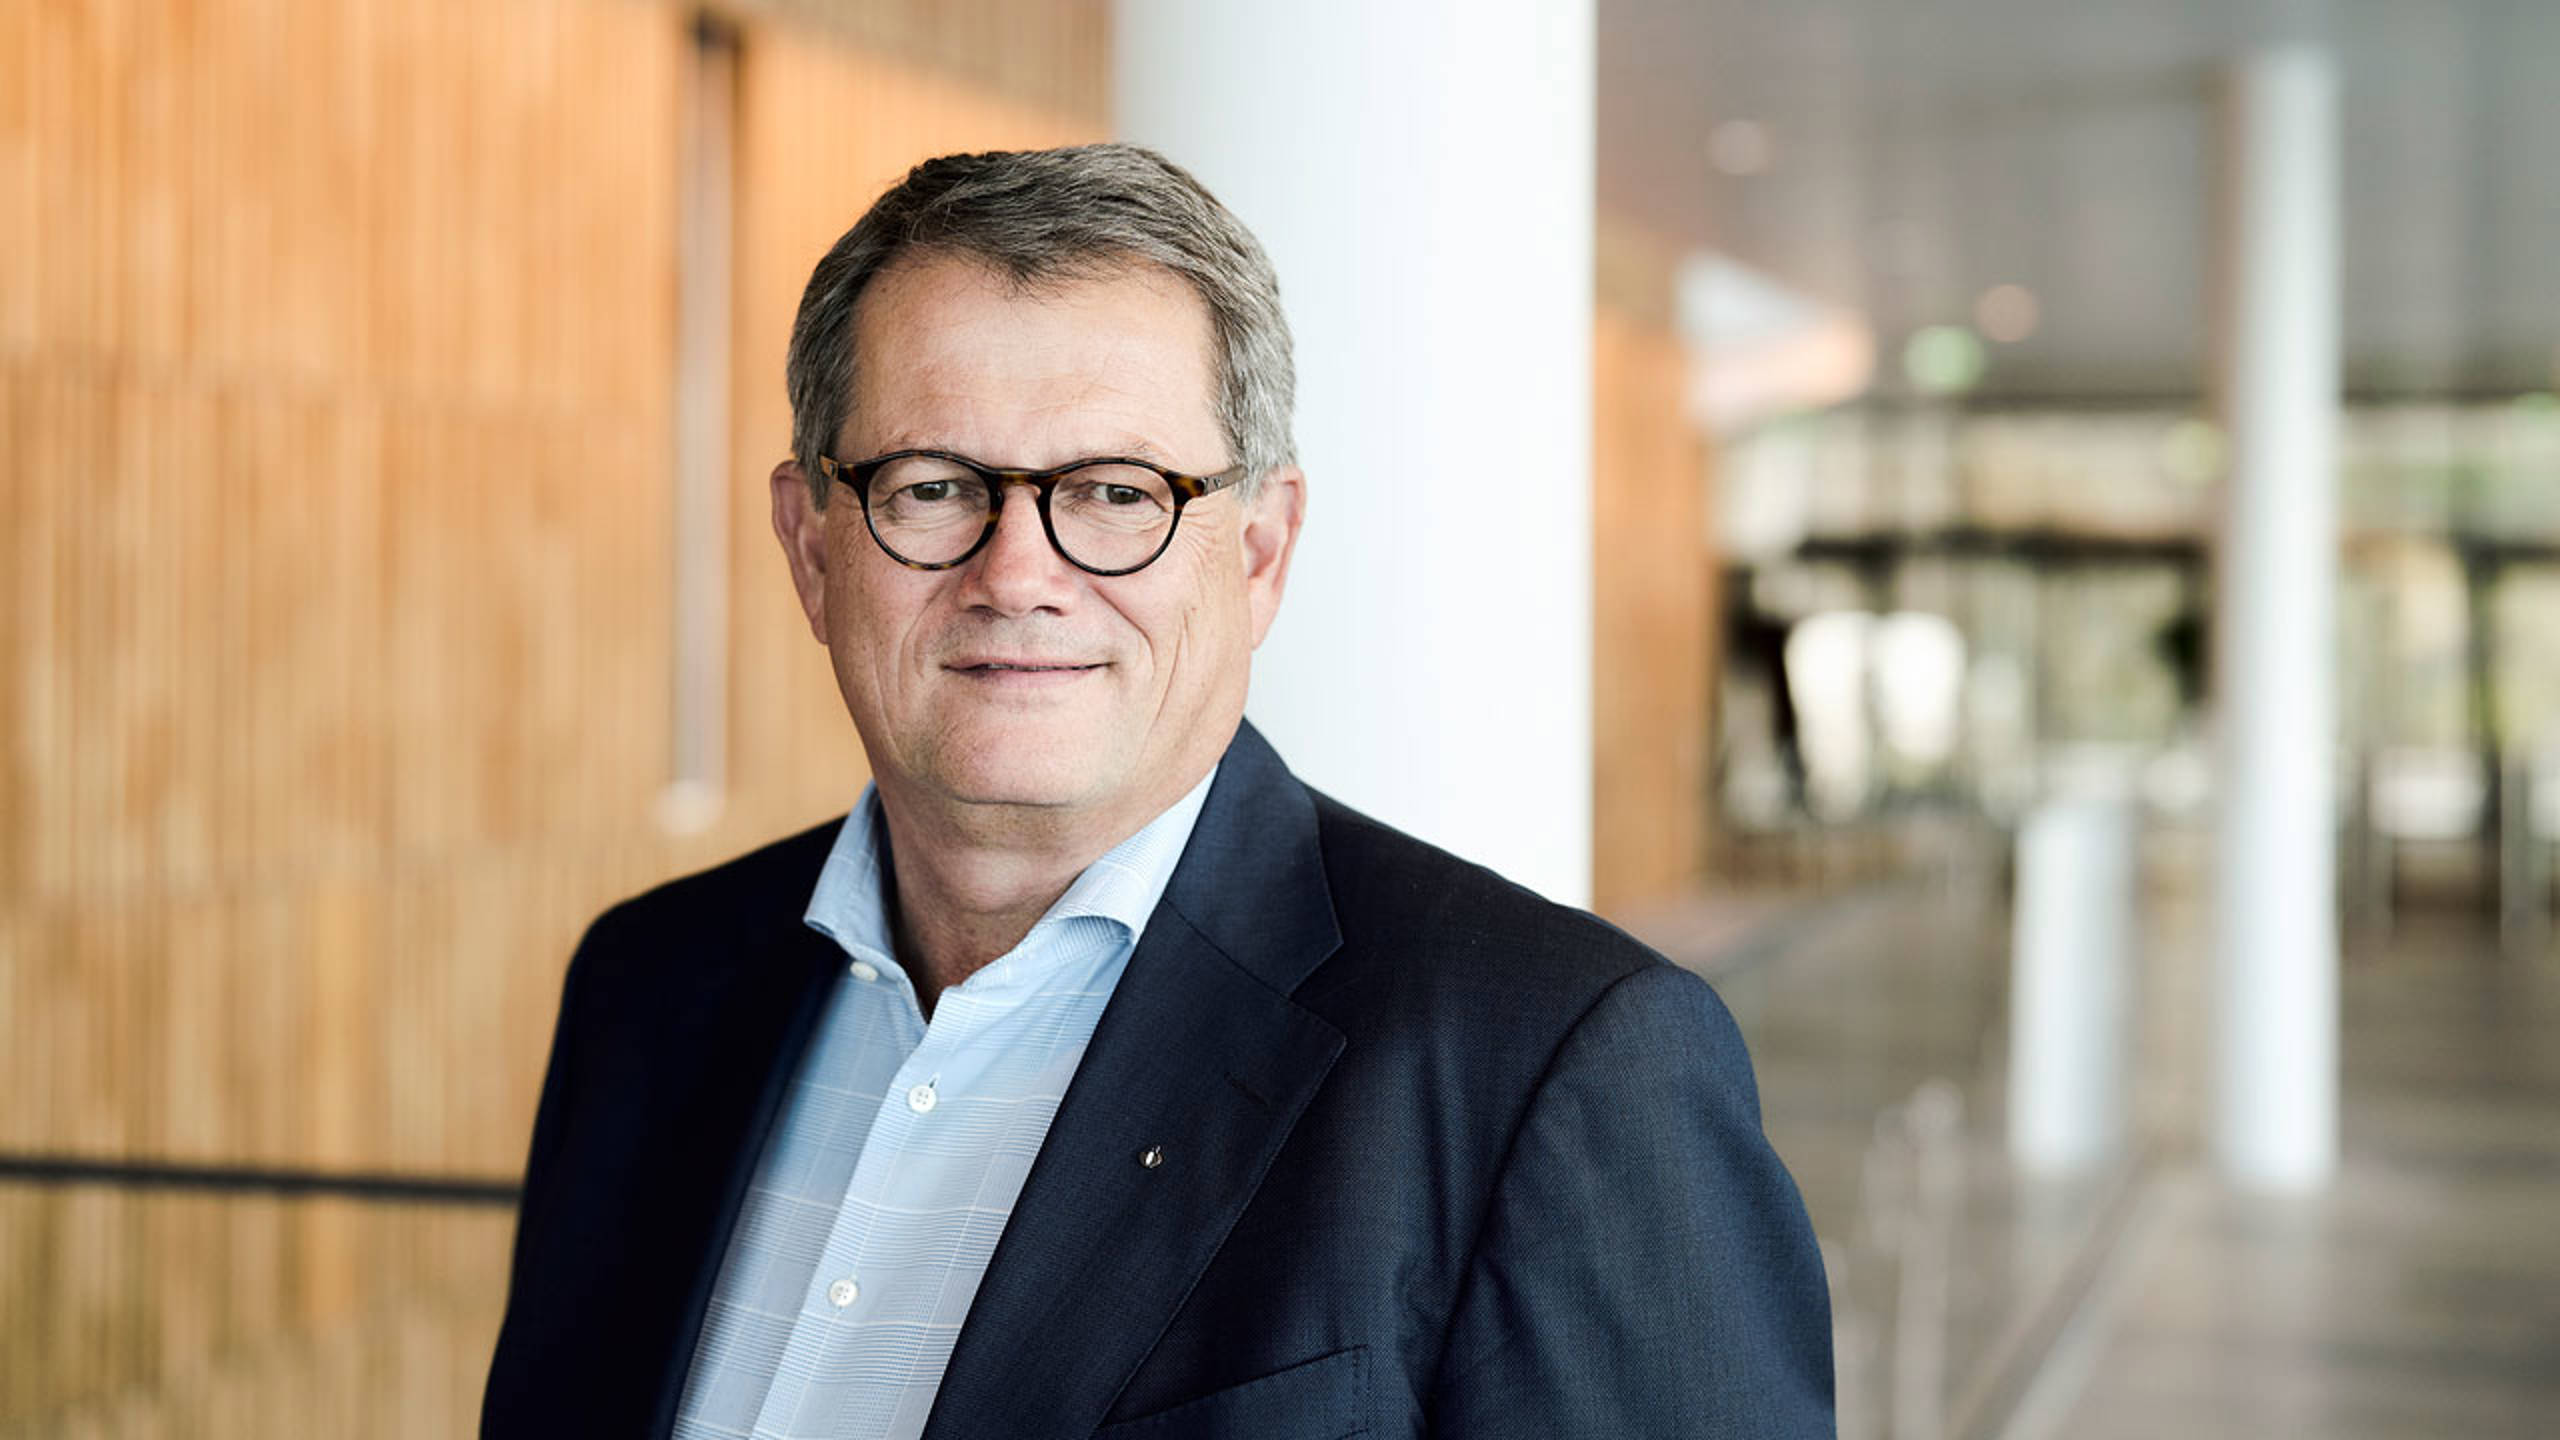 Jotun's President and CEO, Morten Fon